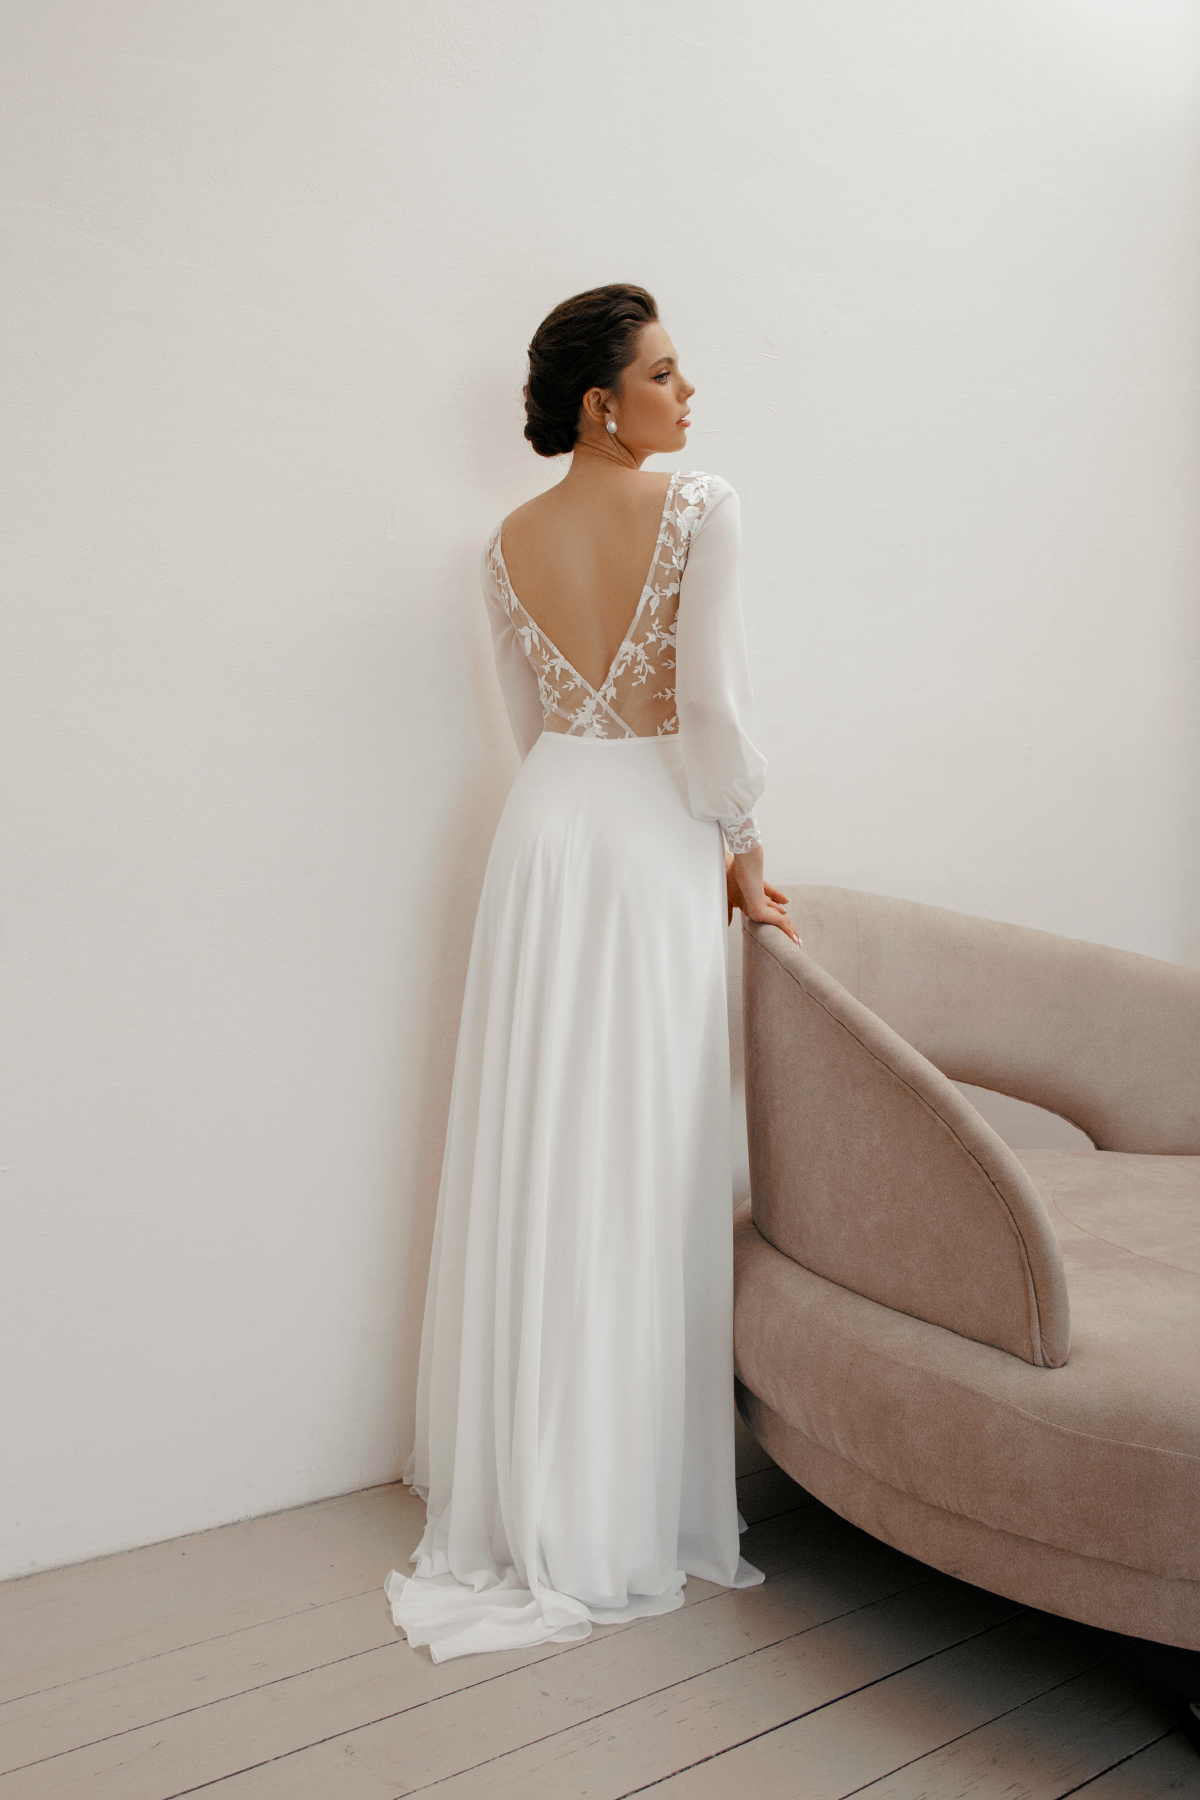 Minimalist long sleeve wedding dress